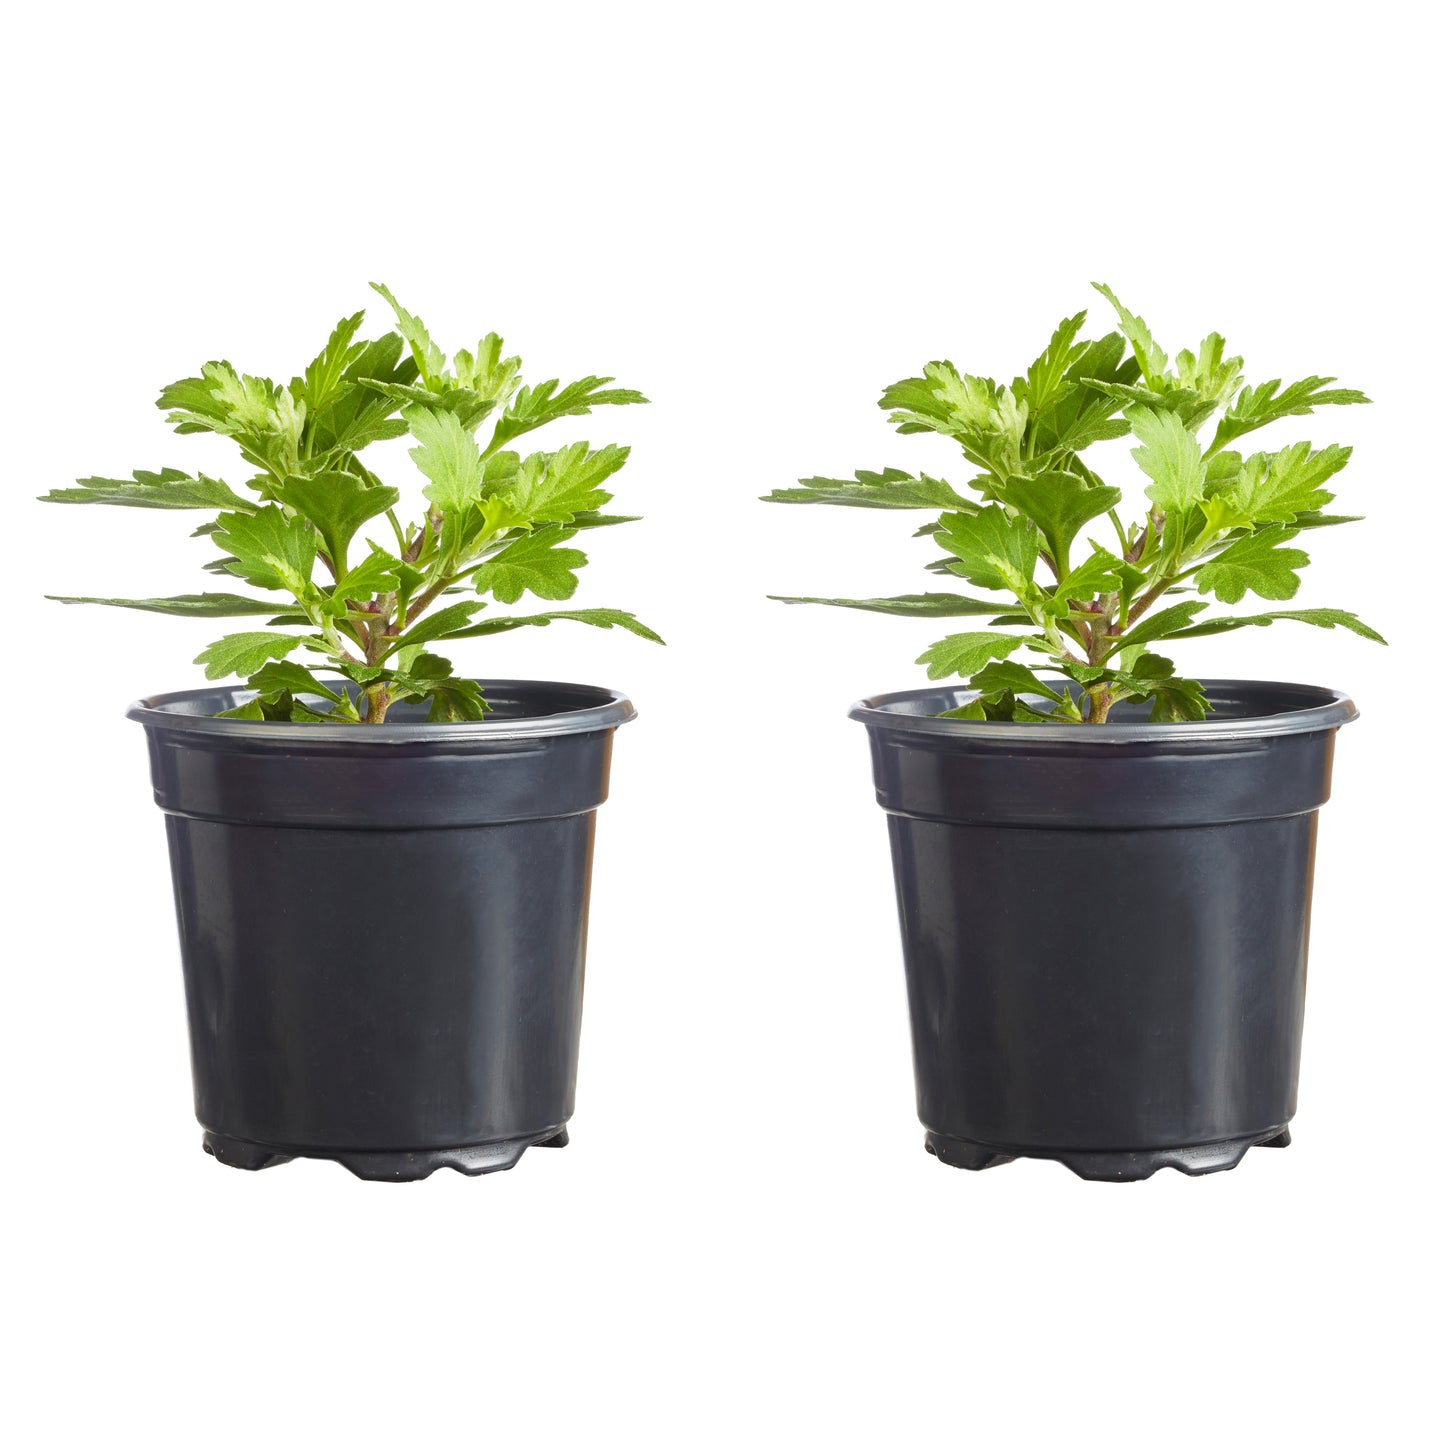 Mums Golden Cheryl Plantlings Plus Live Baby Plants 4in. Pot, 2-Pack